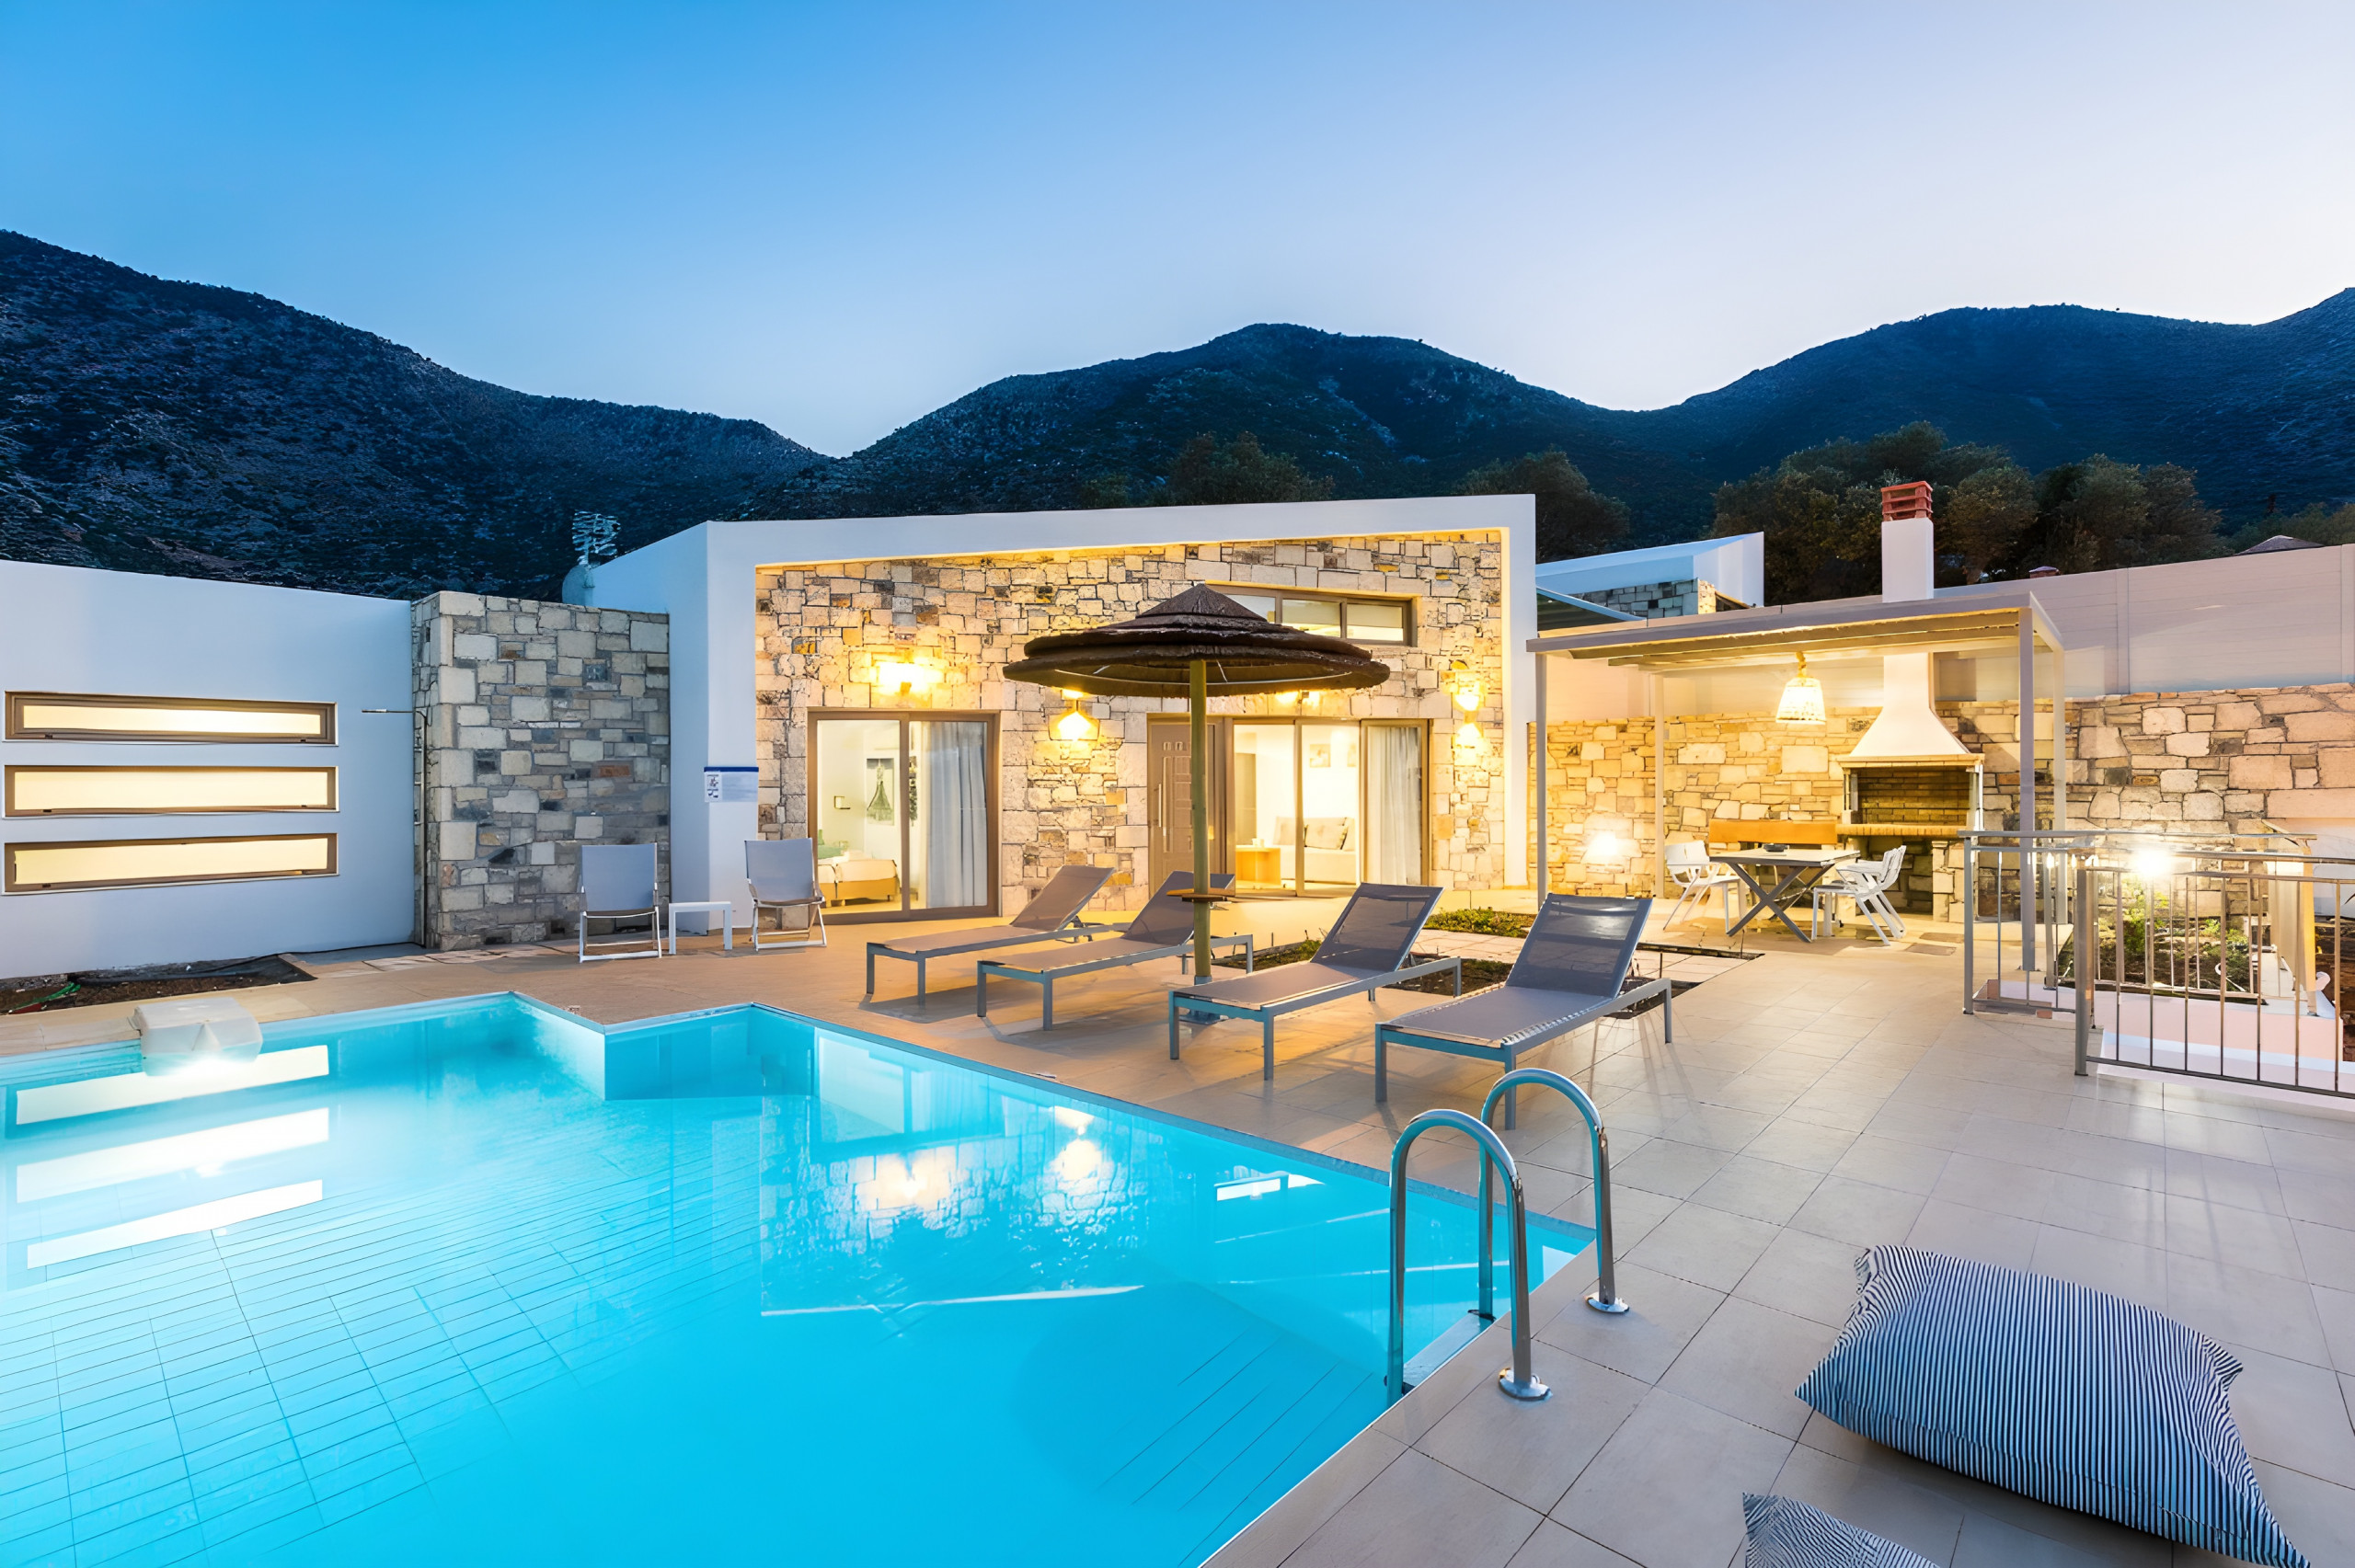 Portokali Villa, an exquisite summer retreat